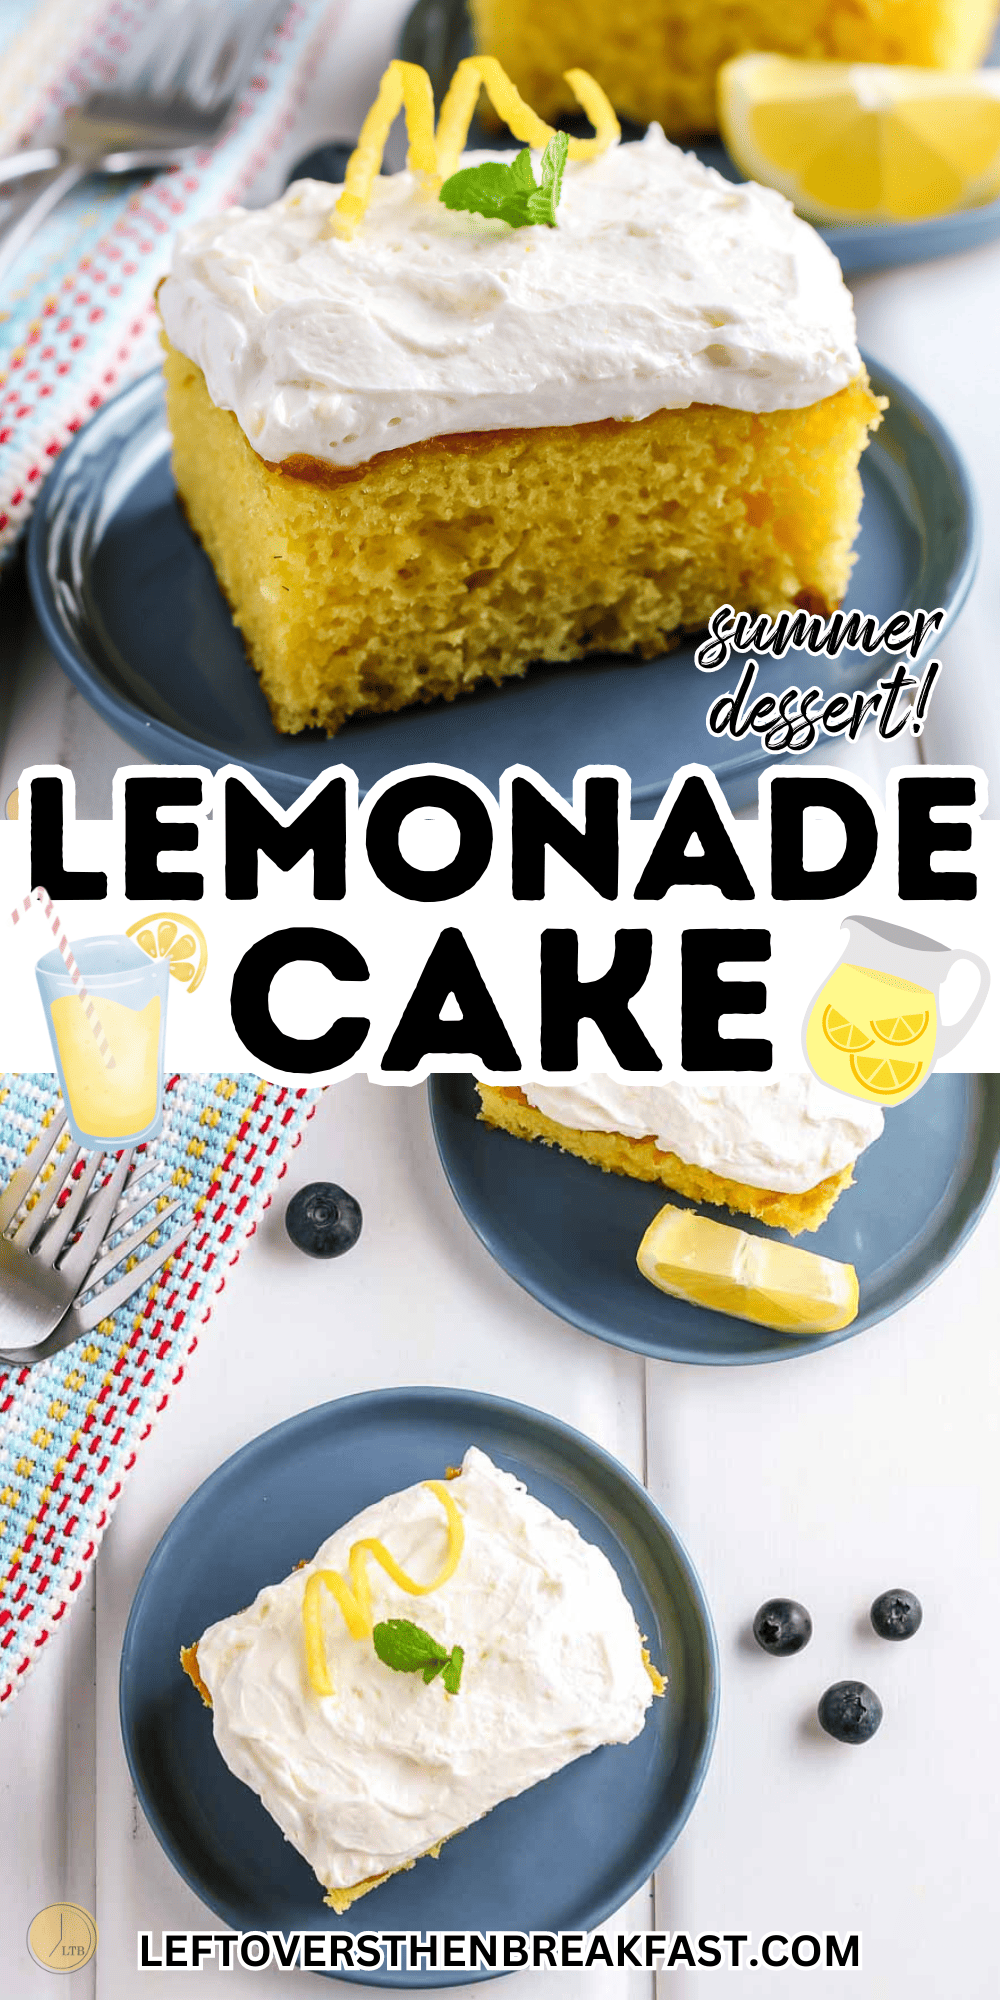 lemonade cake is the perfect summer dessert!